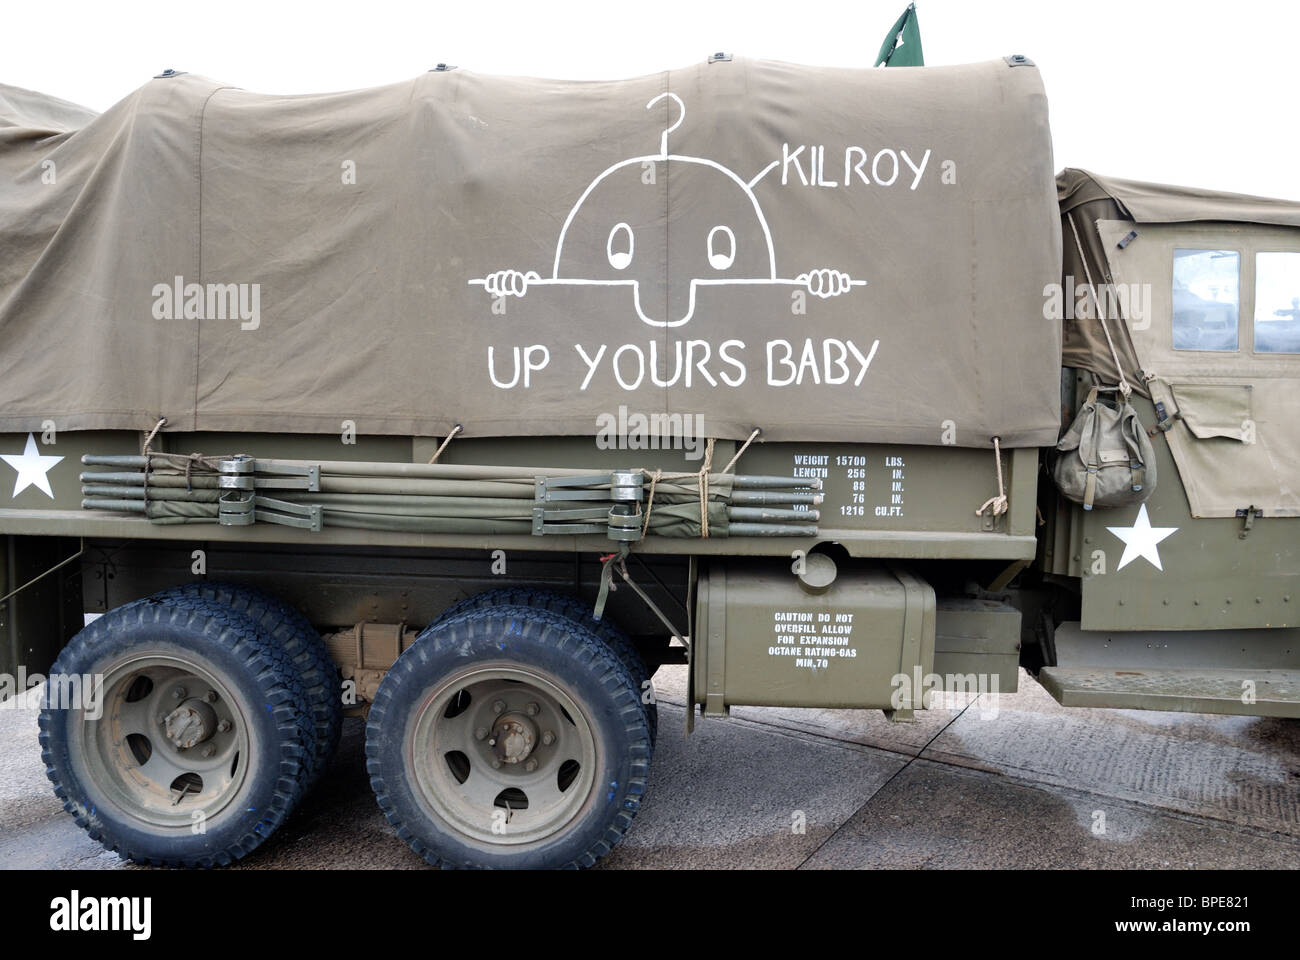 Us military truck with Killroy graffiti Stock Photo